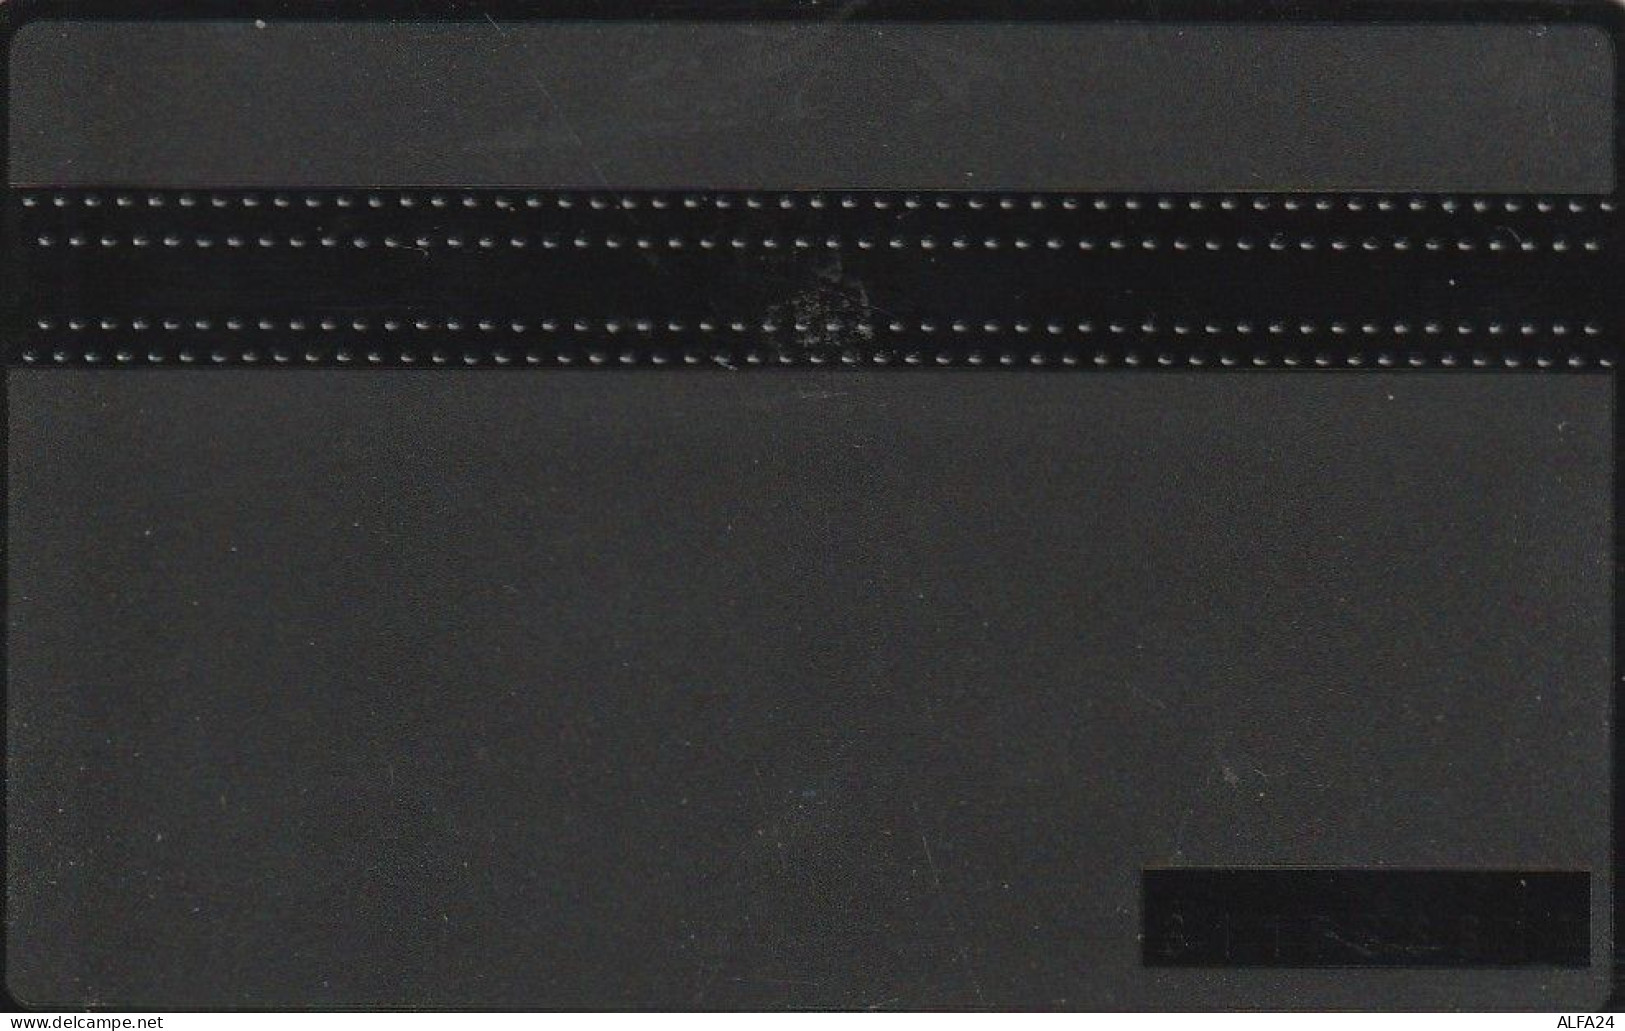 PHONE CARD BELGIO LG (CV6647 - Senza Chip